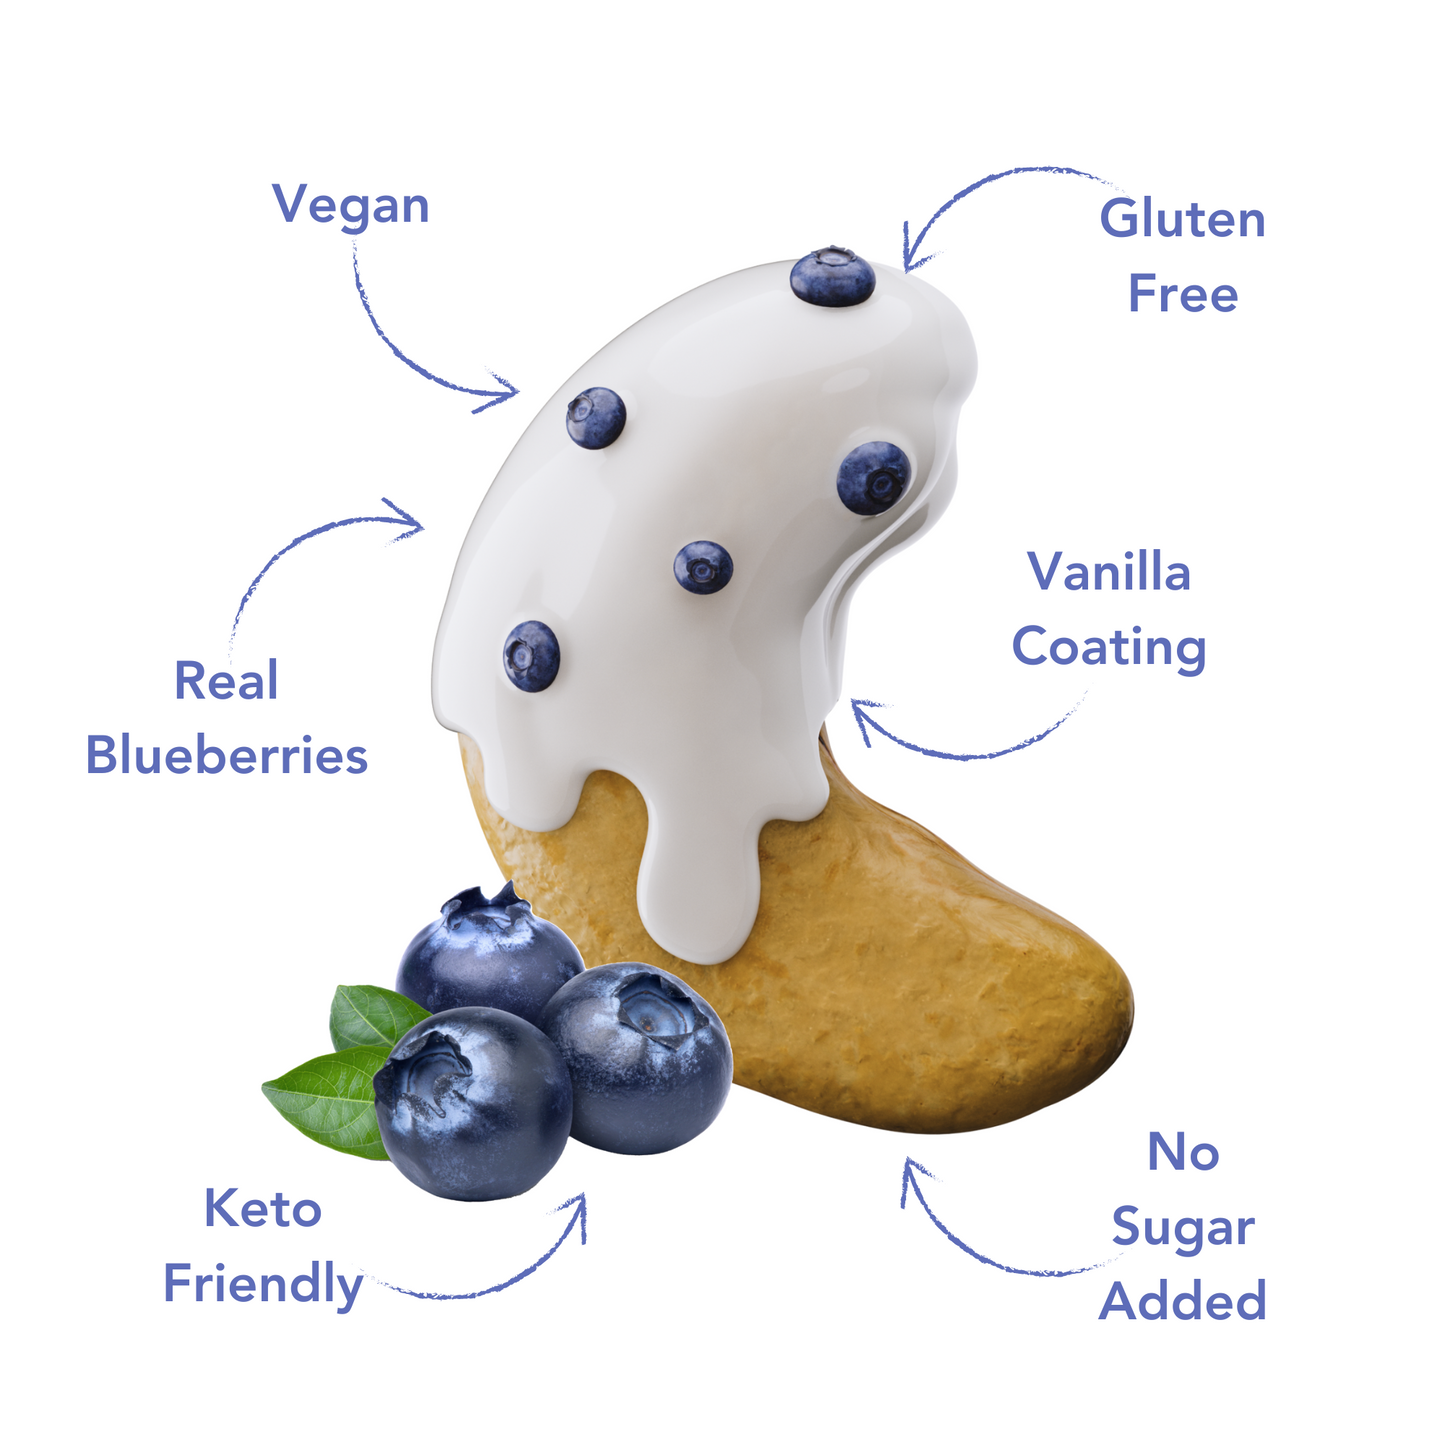 Blueberry Vanilla Cashews